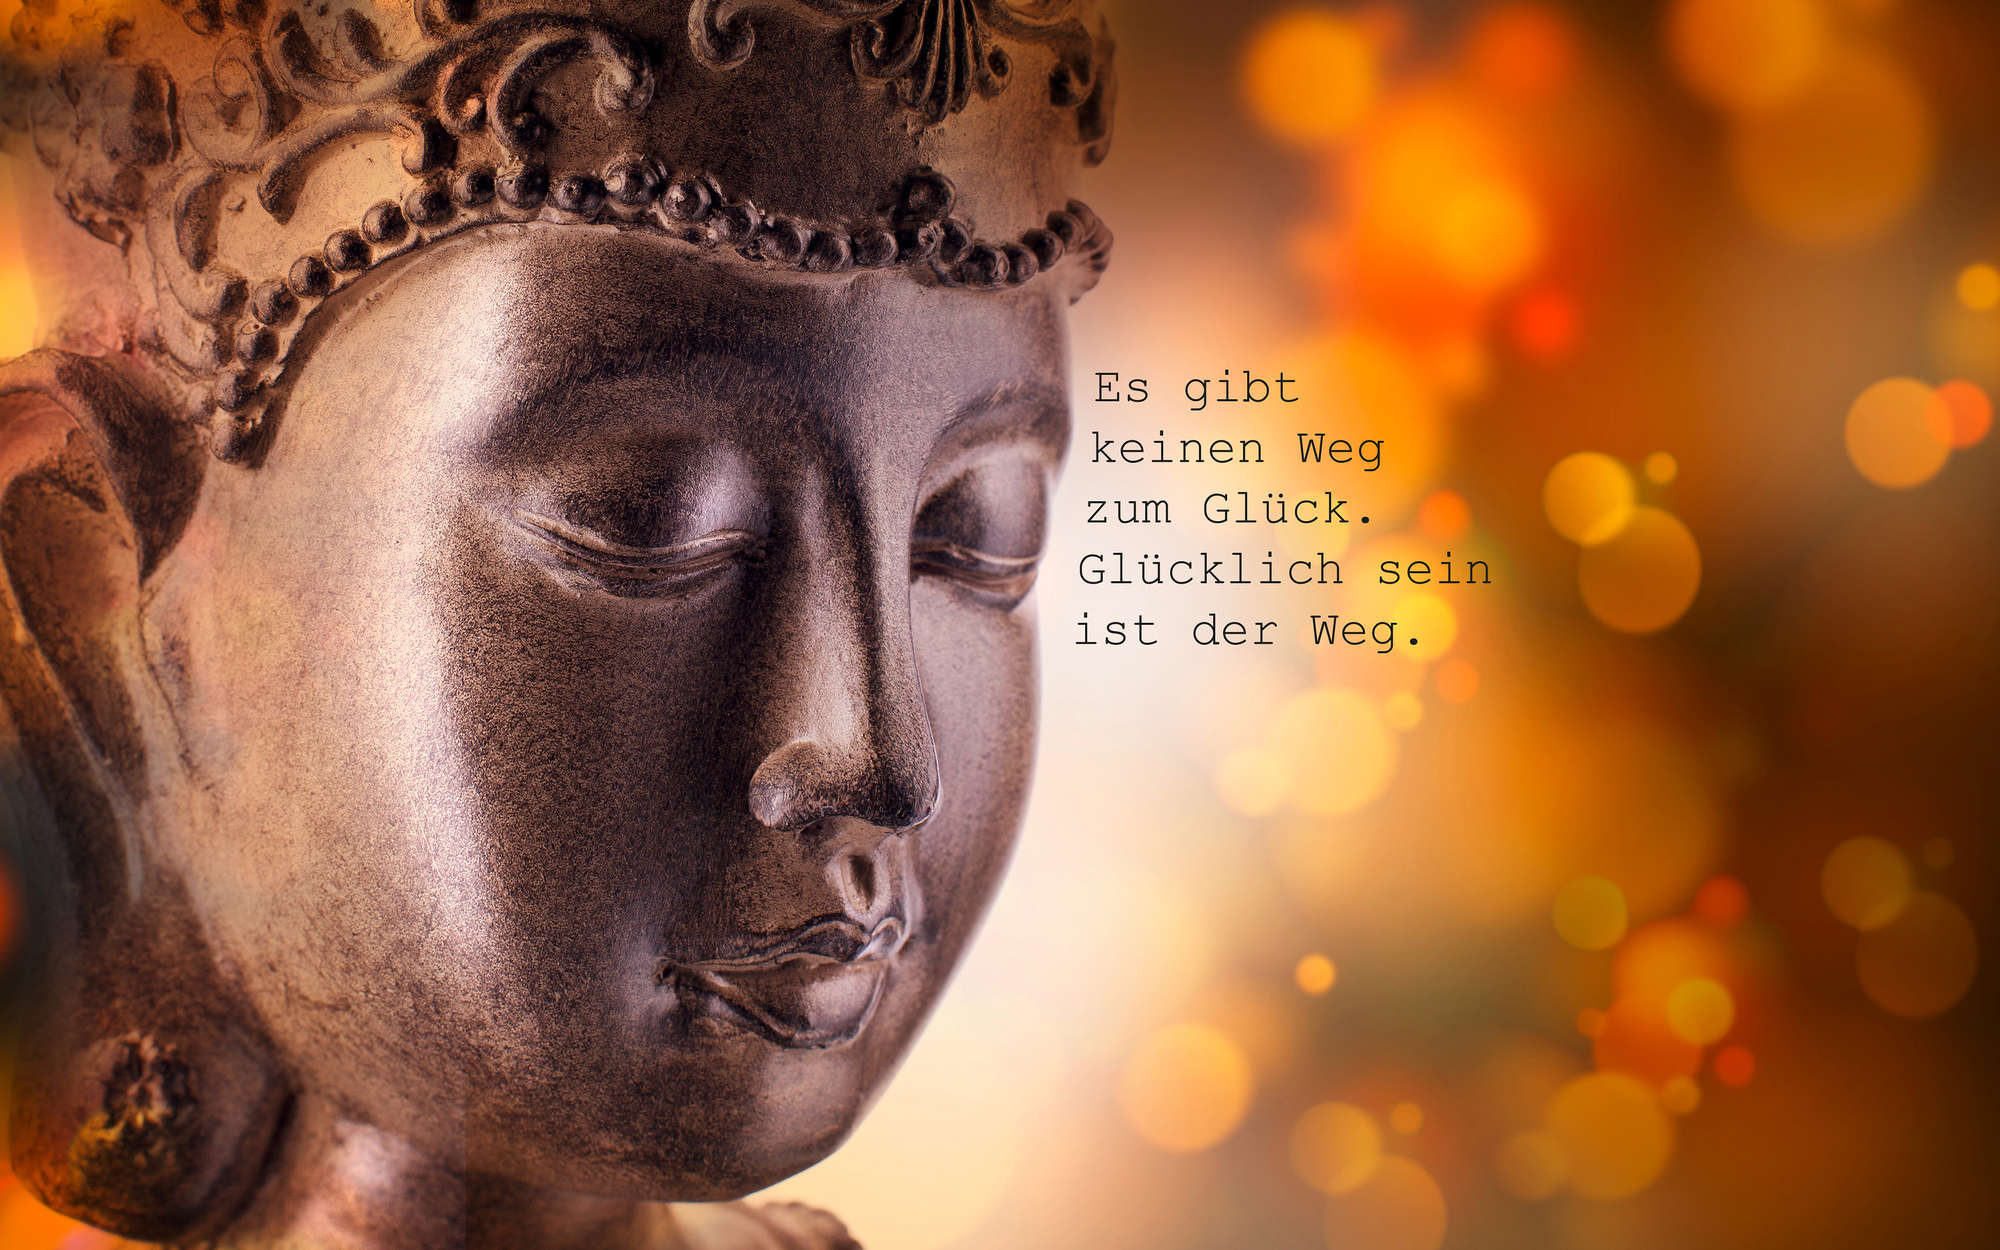             Fototapete Buddha mit Glück-Schriftzug – Perlmutt Glattvlies
        